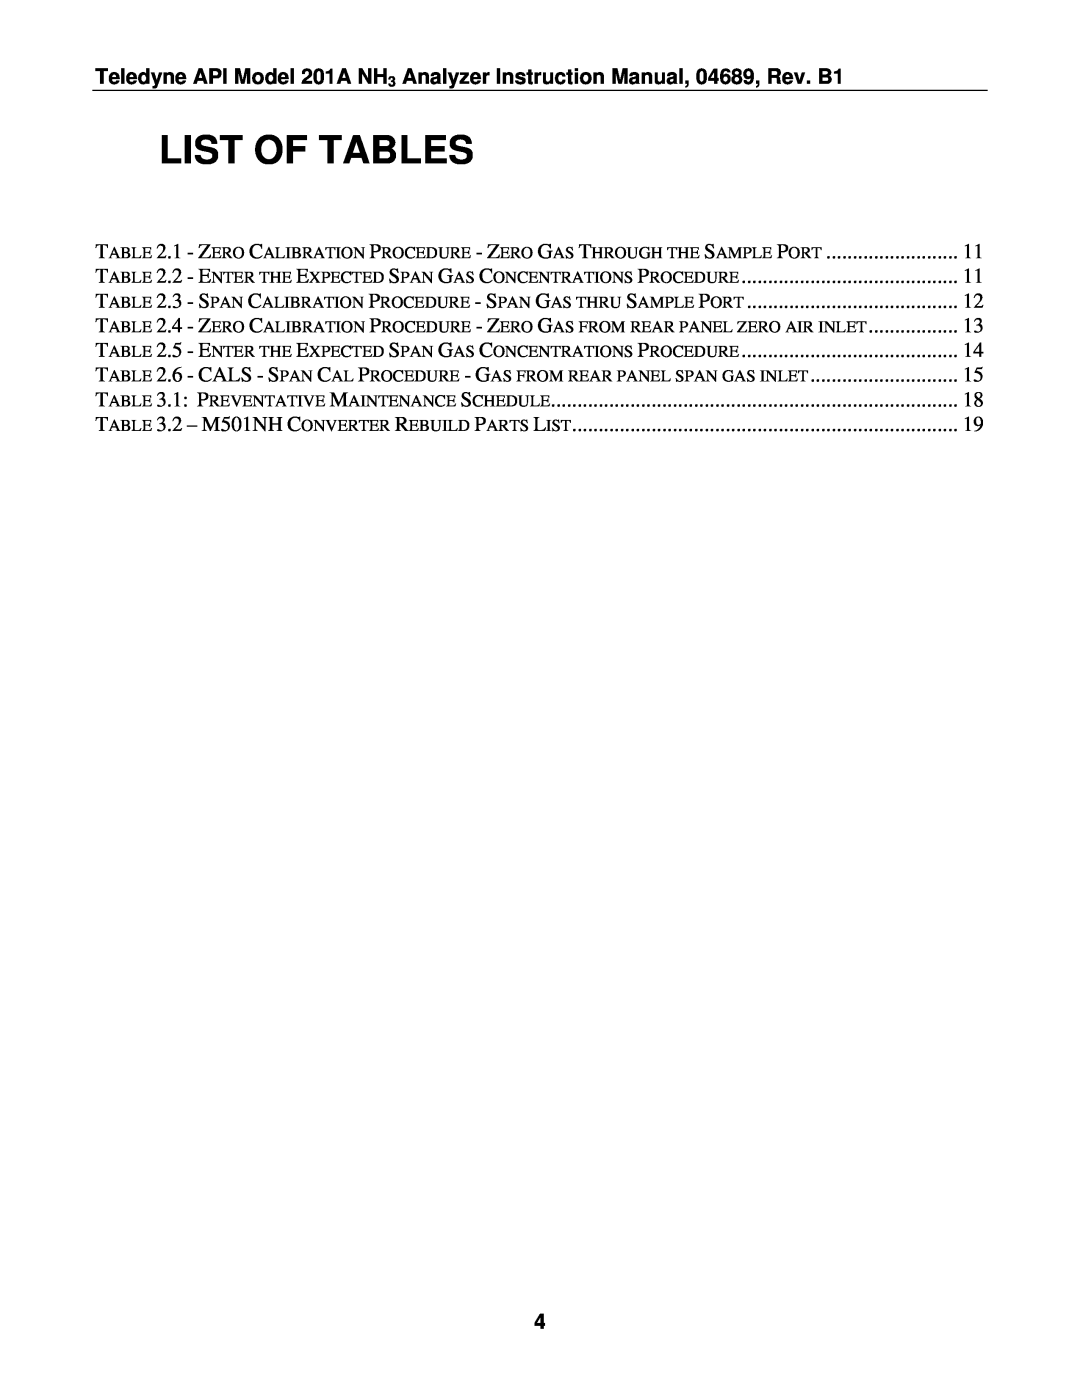 Teledyne 201A manual List Of Tables 